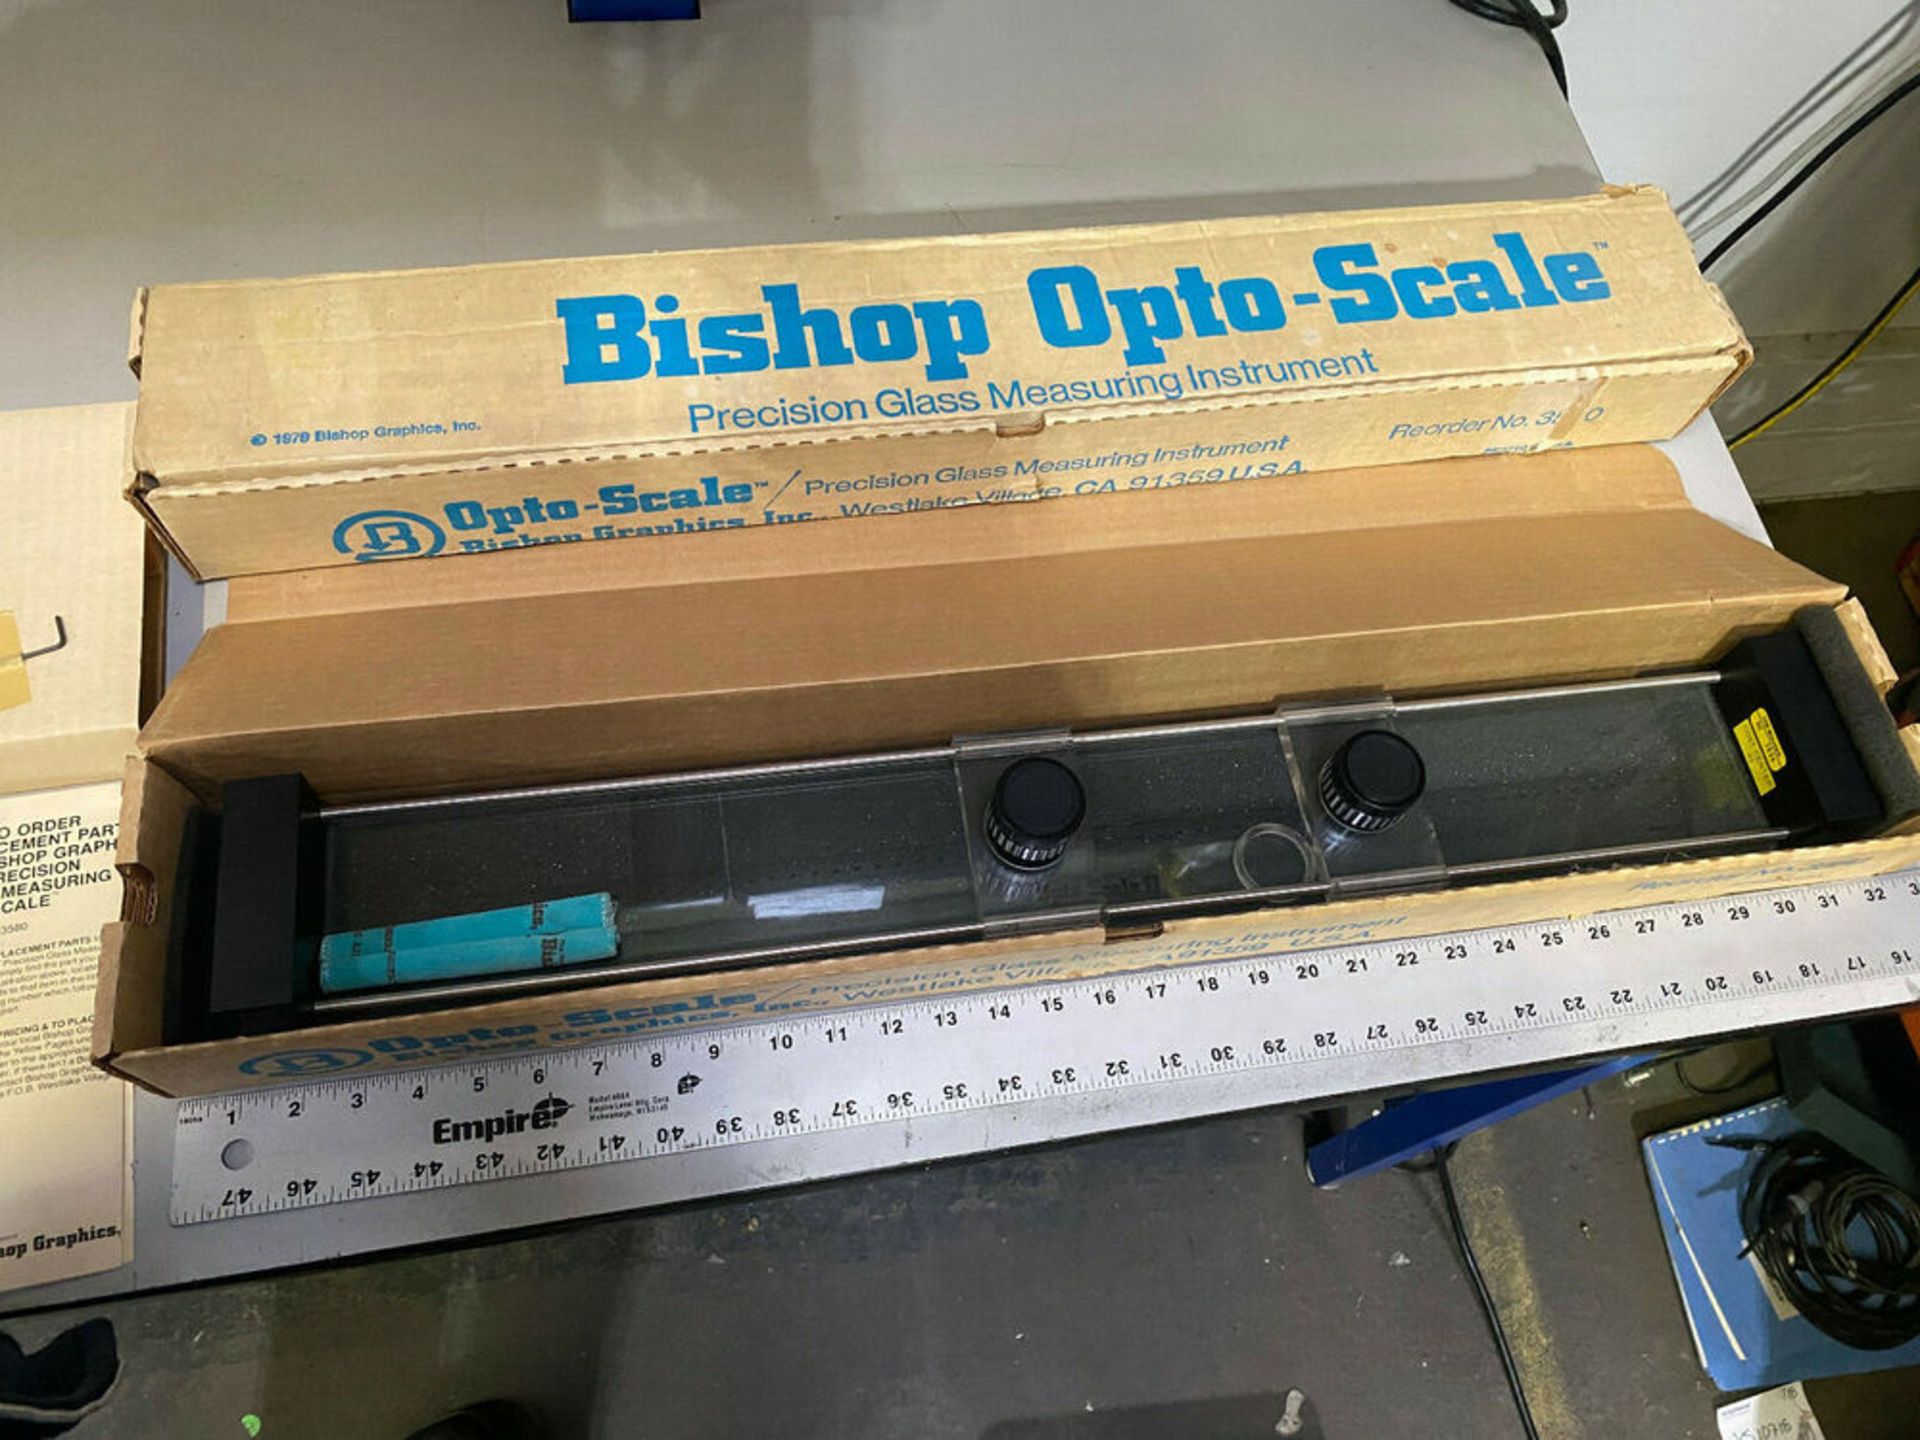 Bishop Graphics Model 3581 Opto-Scale II Precision Glass Measuring Instrument